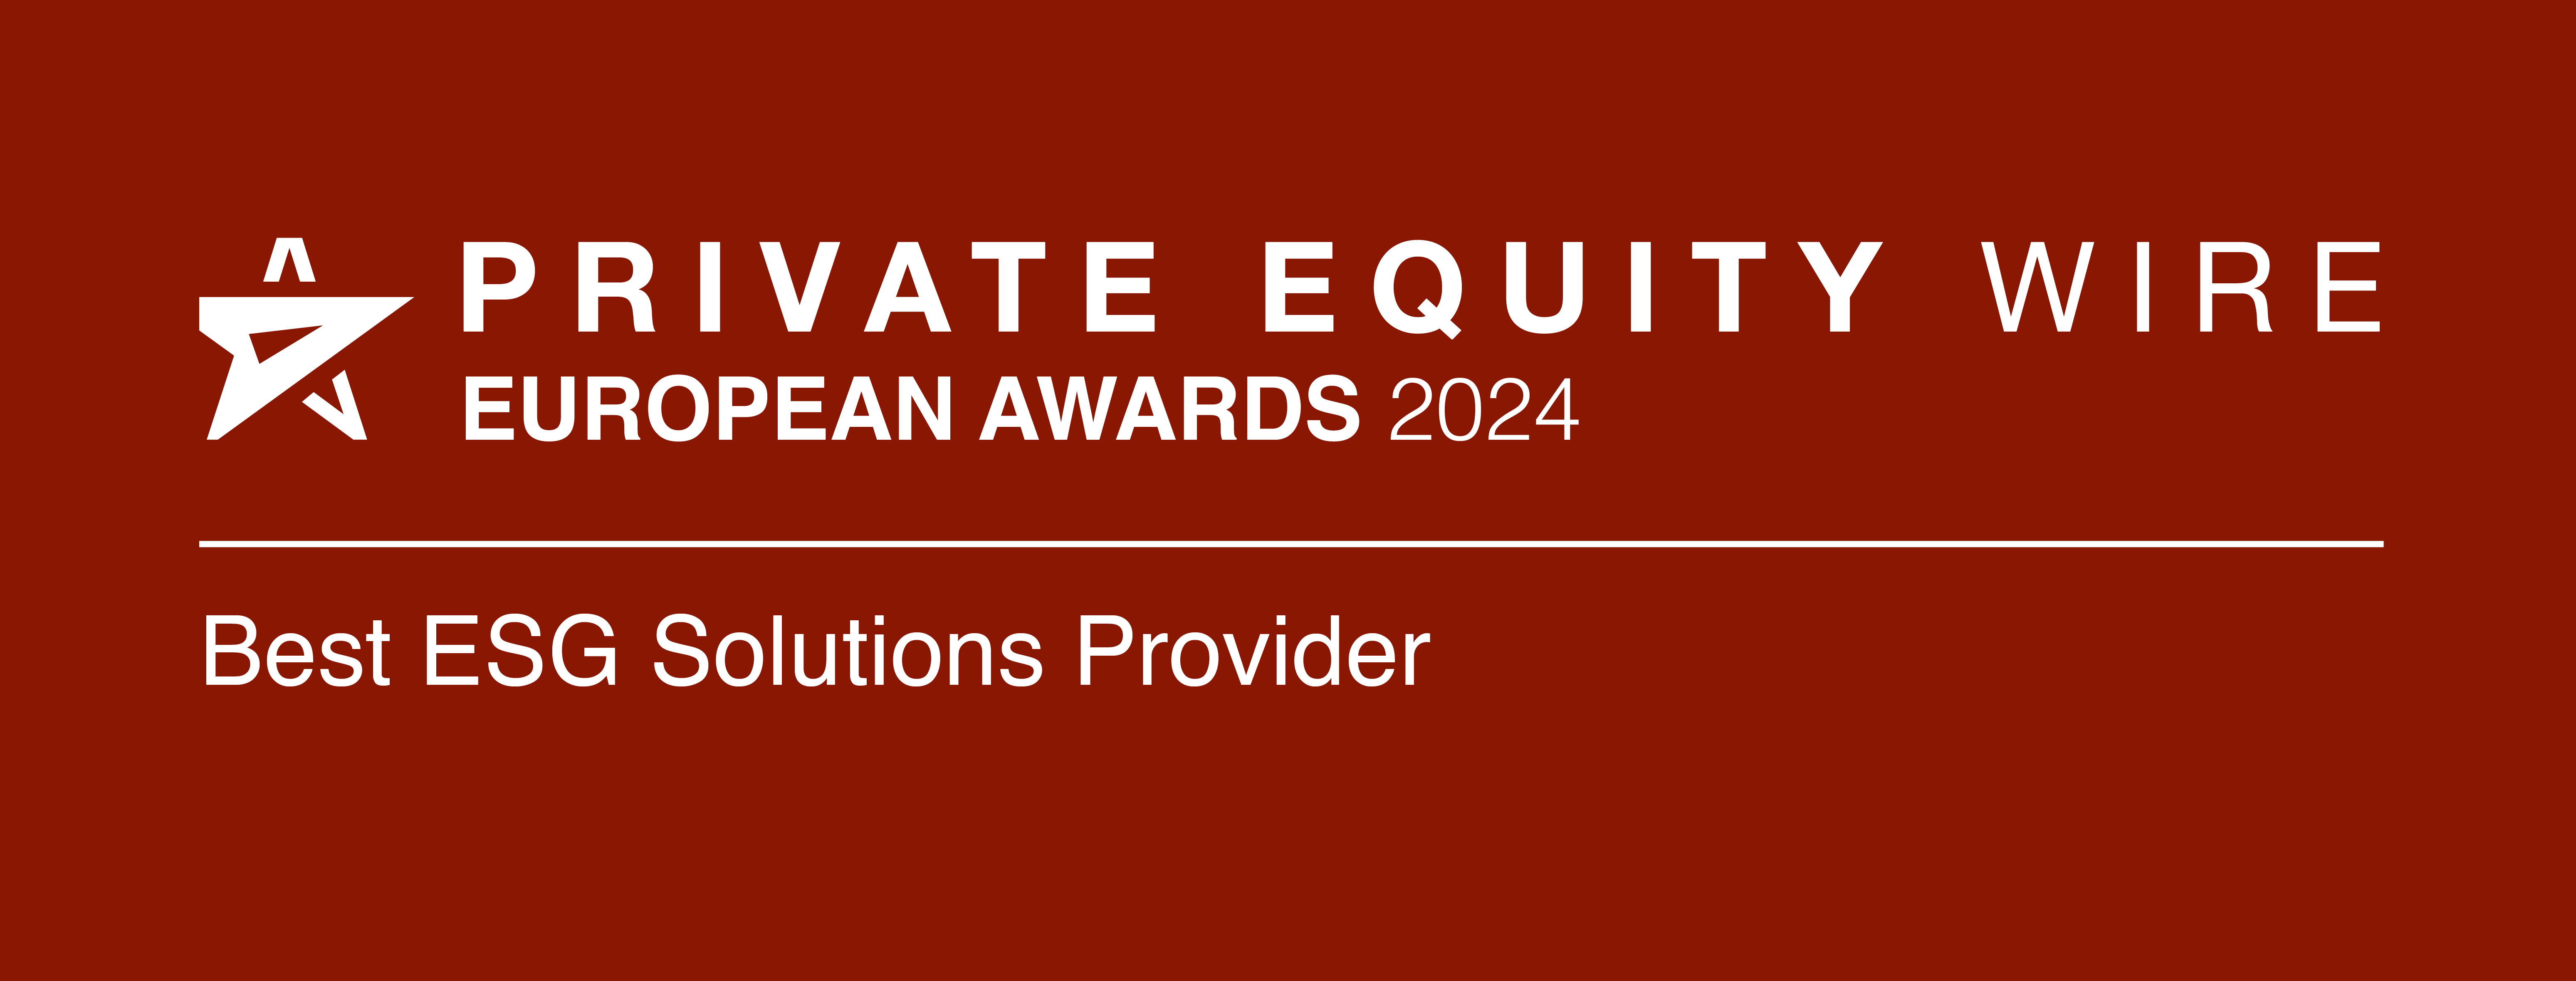 Best ESG Solutions Provider 2024 1